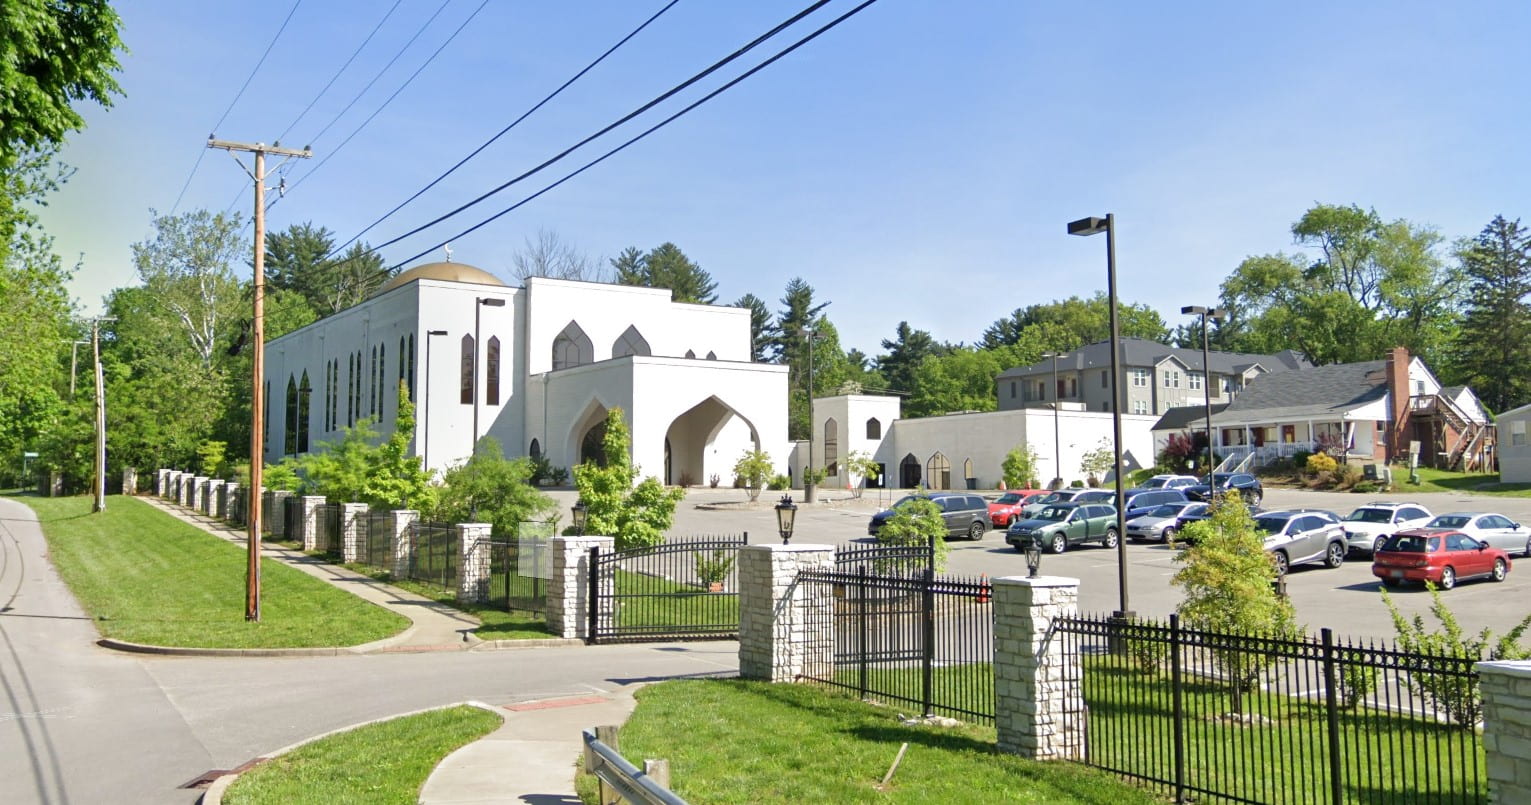 Muslim Community Center of Louisville